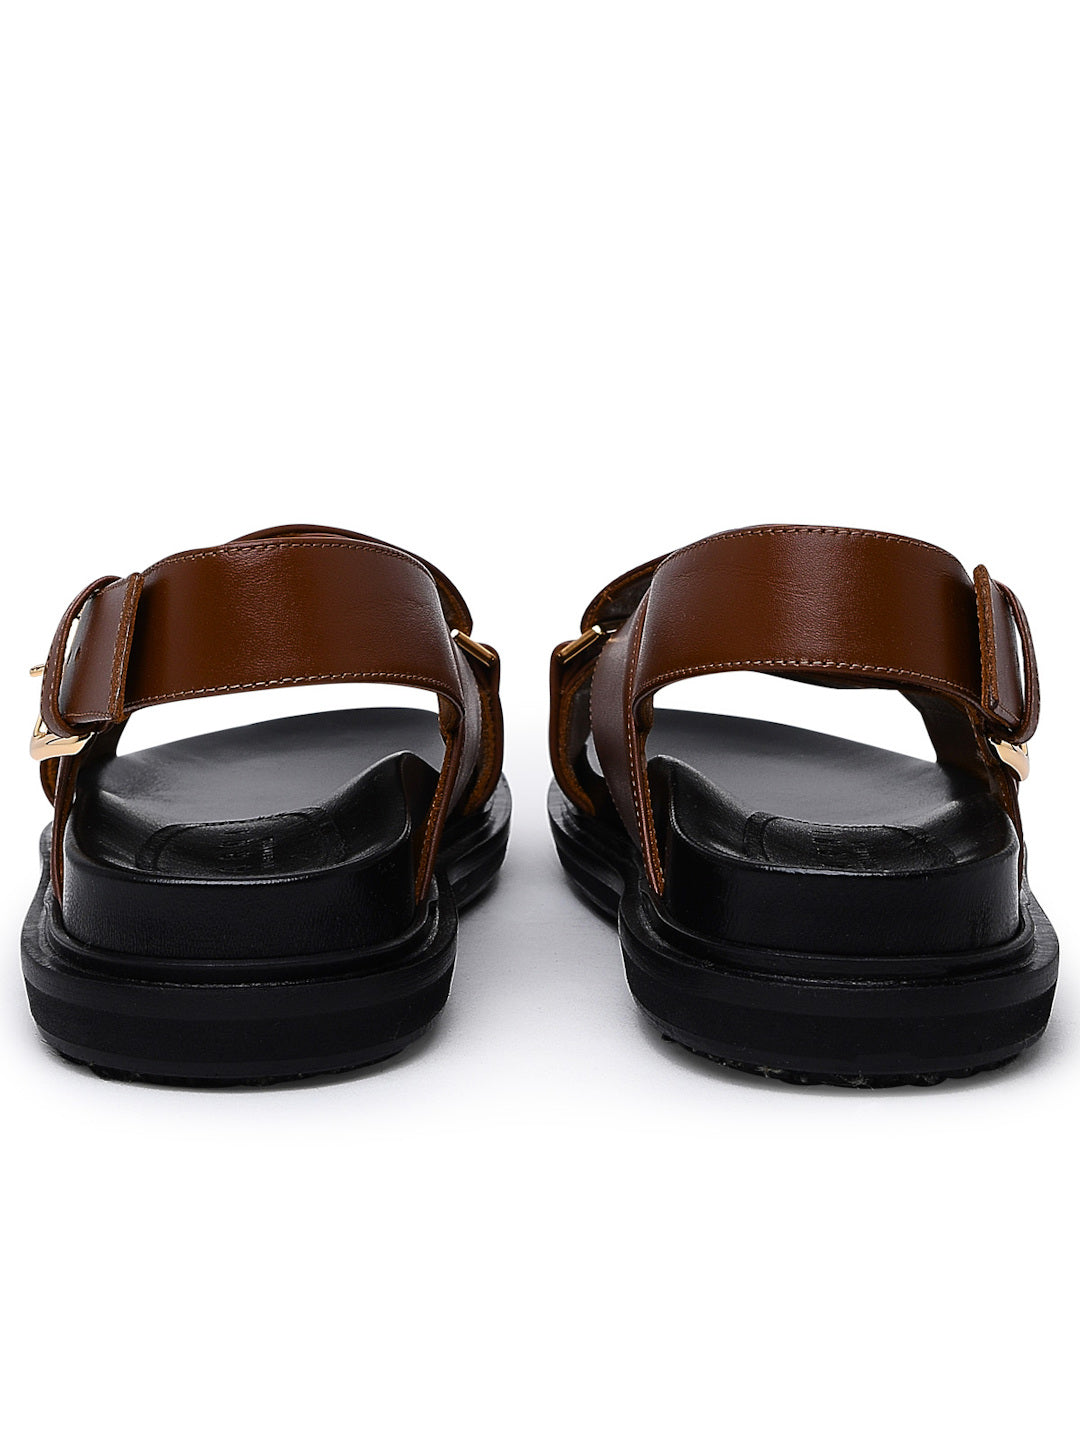 Marni Woman Leather Fussbett Sandals